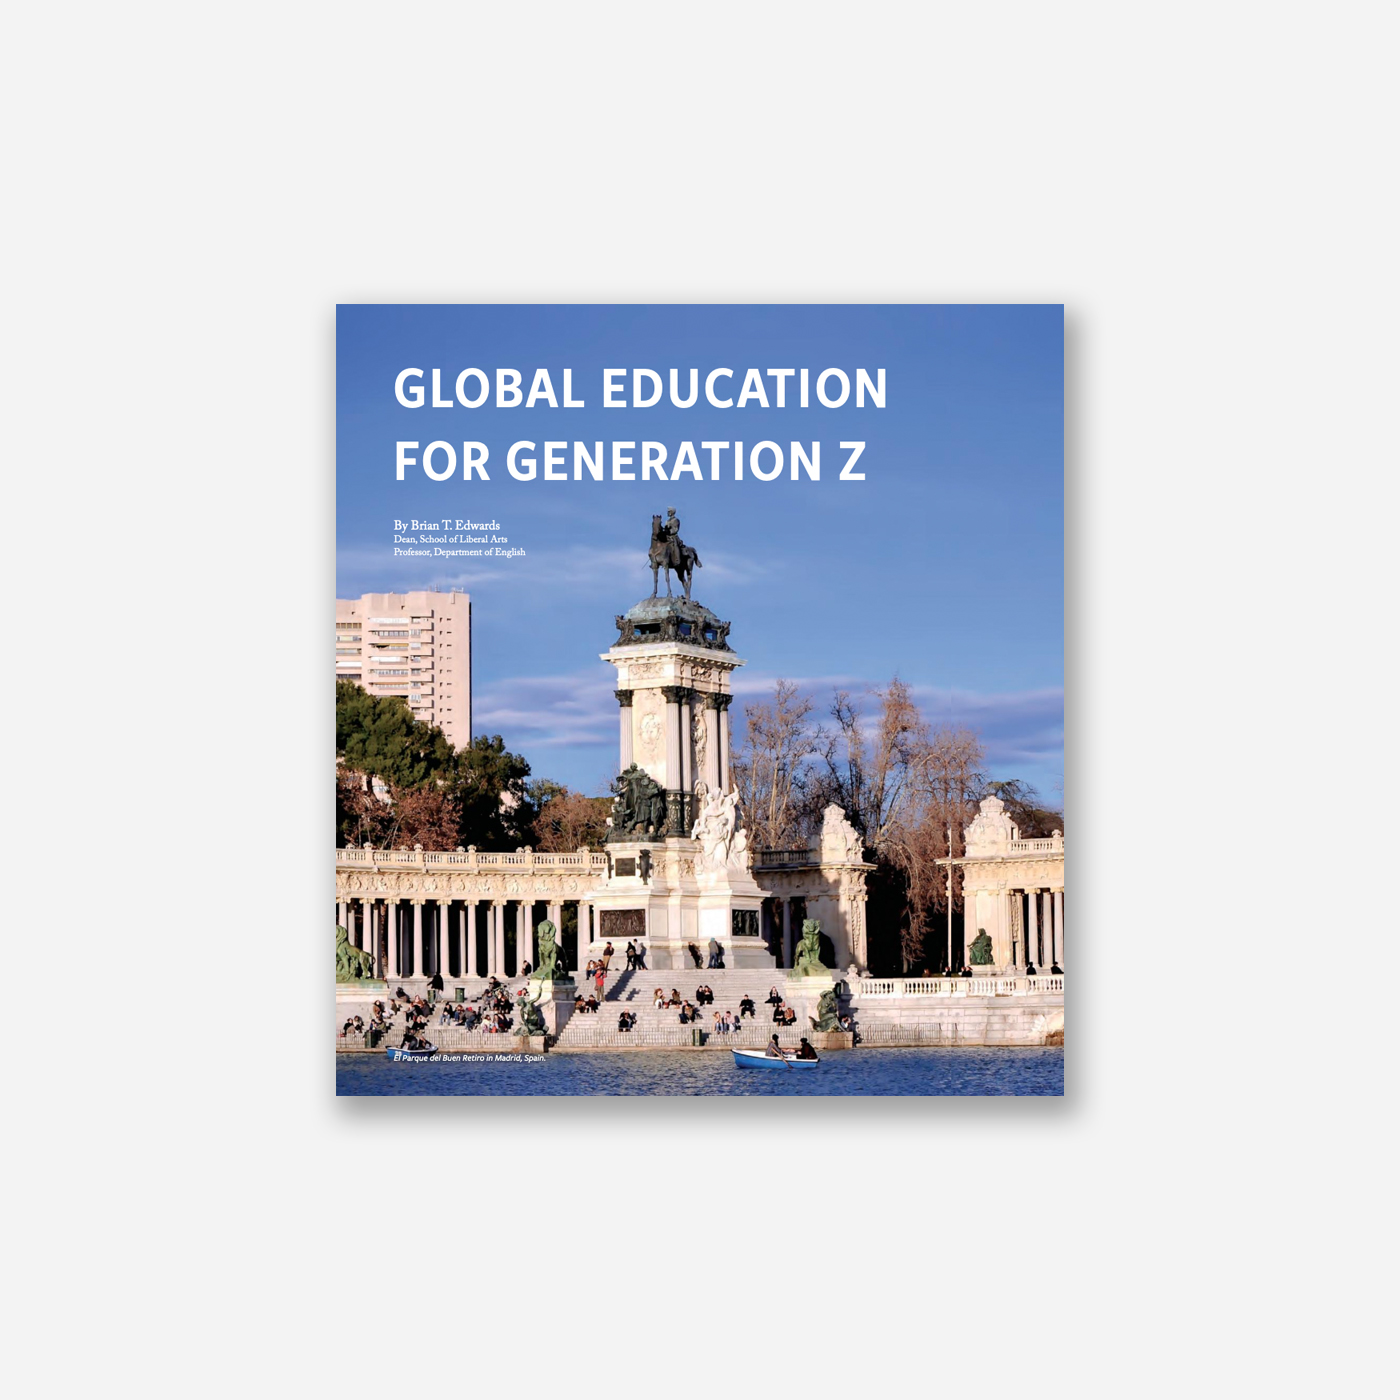 Global Education for Generation Z